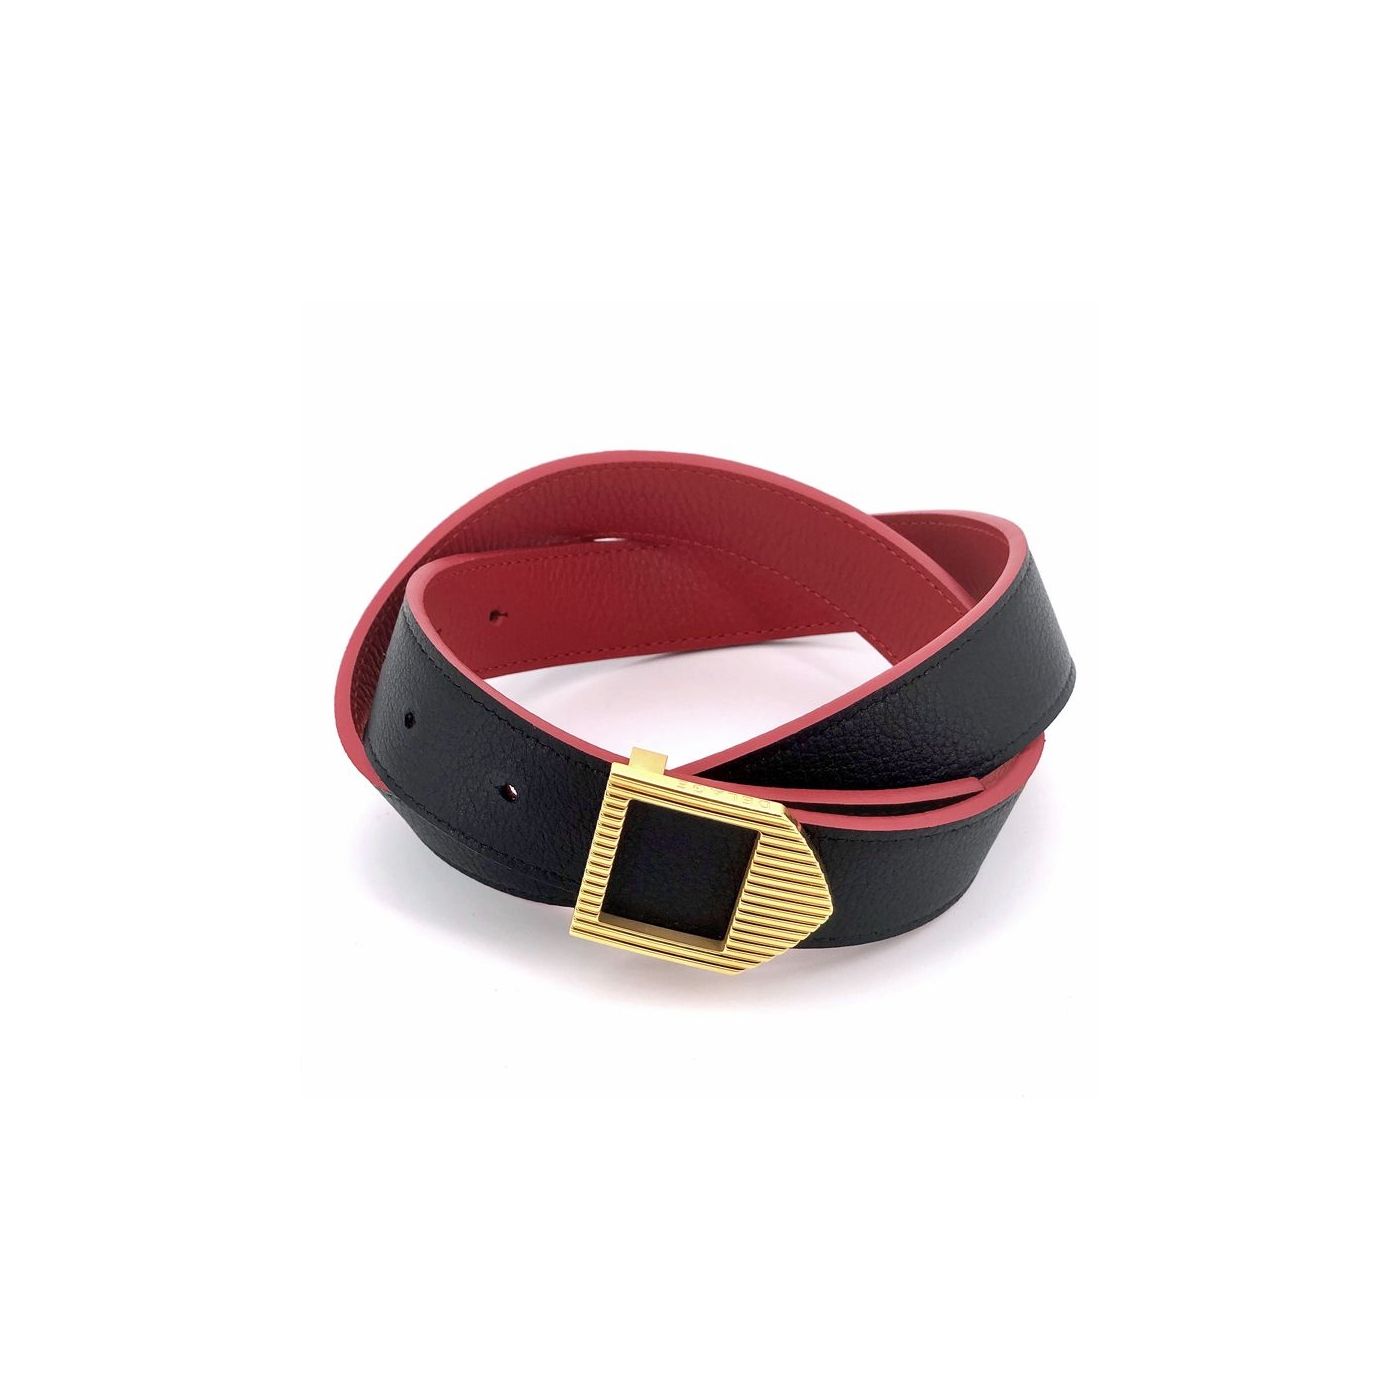 Reversible leather belt red & black / gold buckle